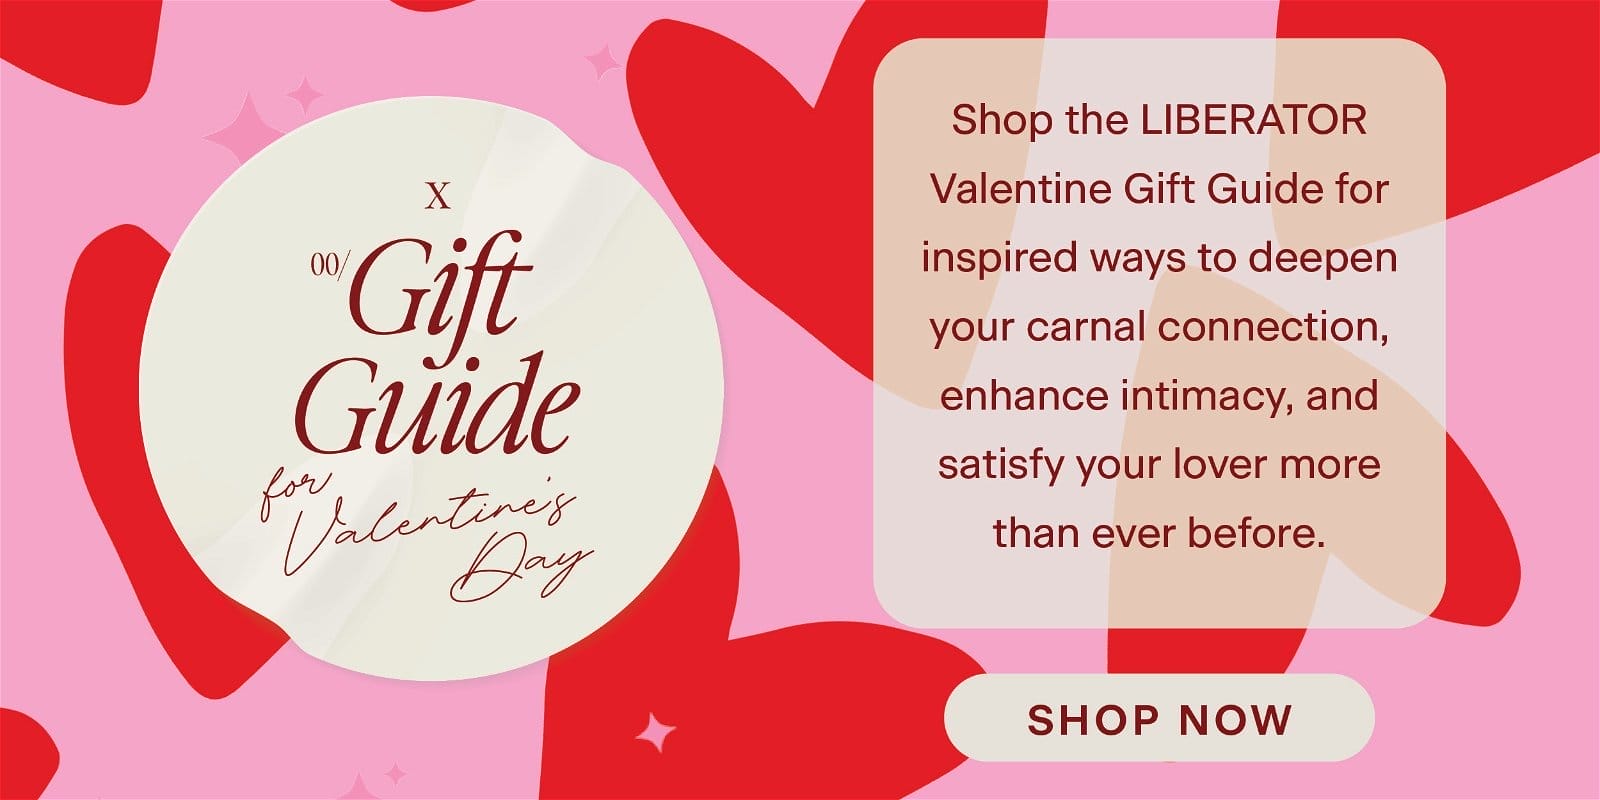 Shop the Liberator Valentine Gift Guide